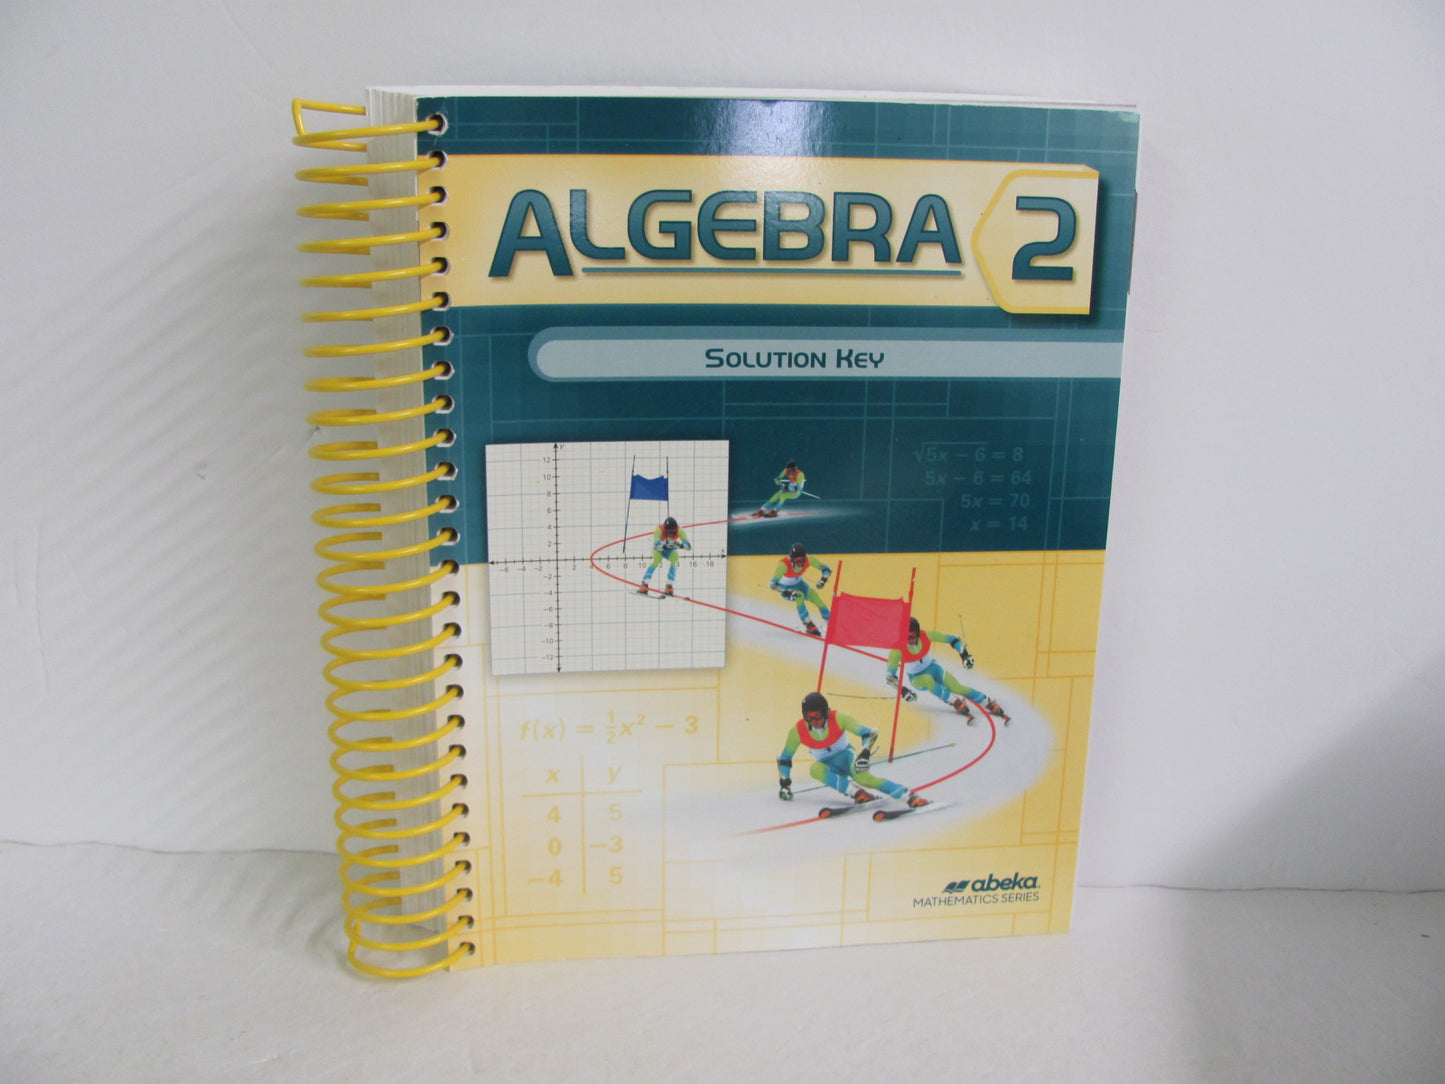 Algebra 2 Abeka Solution Key Pre-Owned 10th Grade Mathematics Textbooks